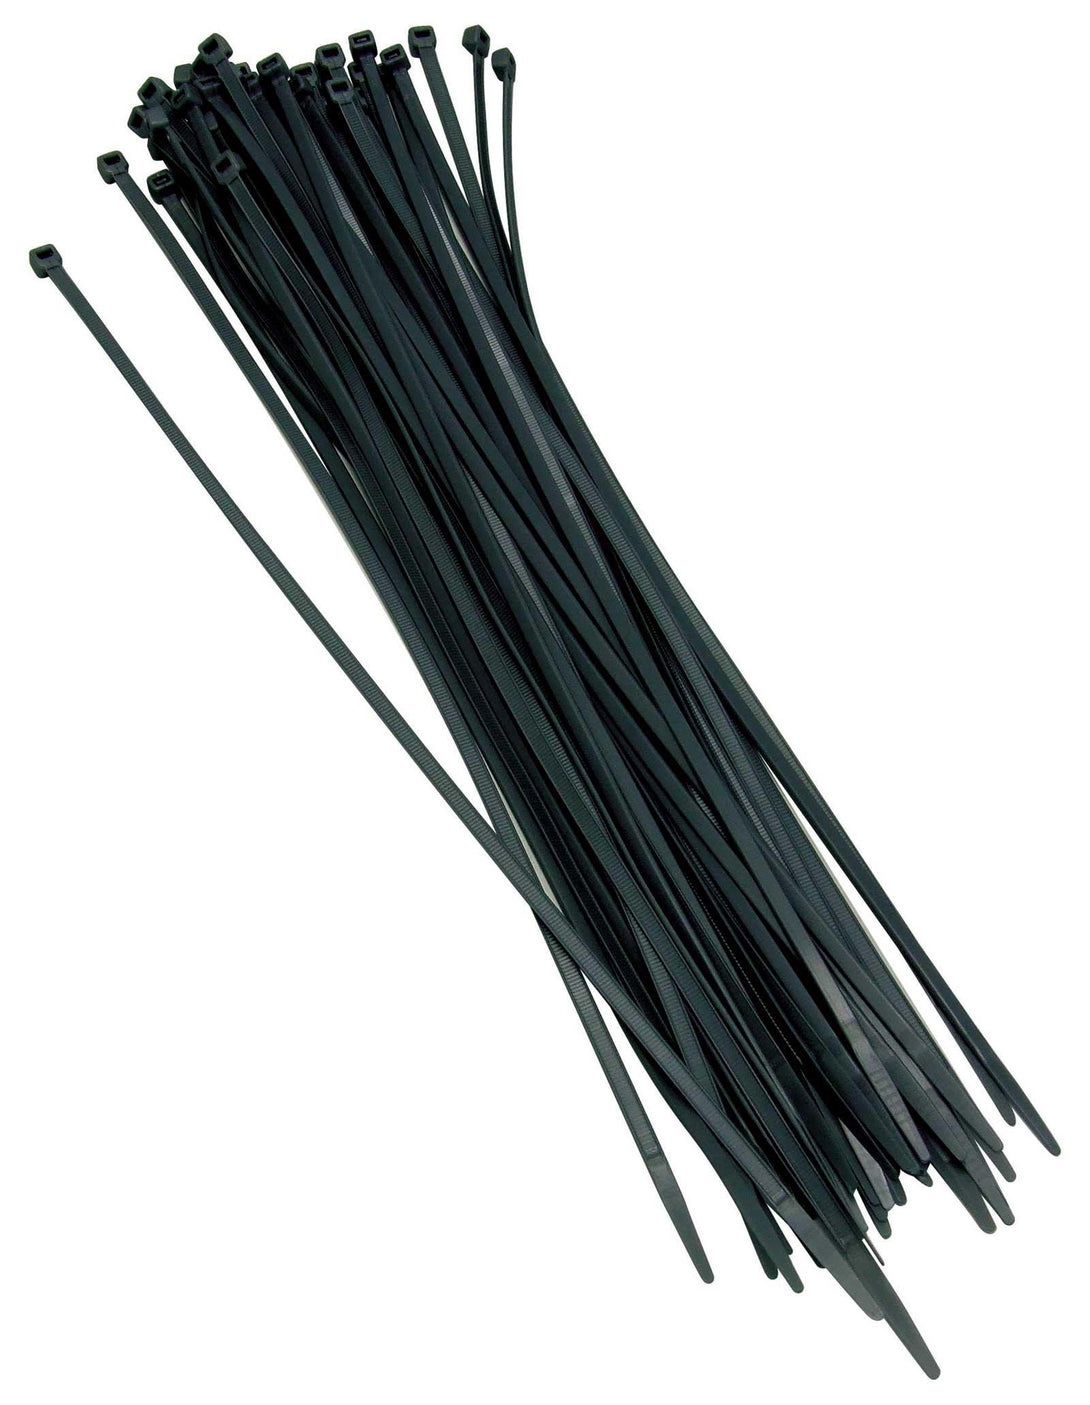 Cable Ties - 340mm PK30 - Towsure